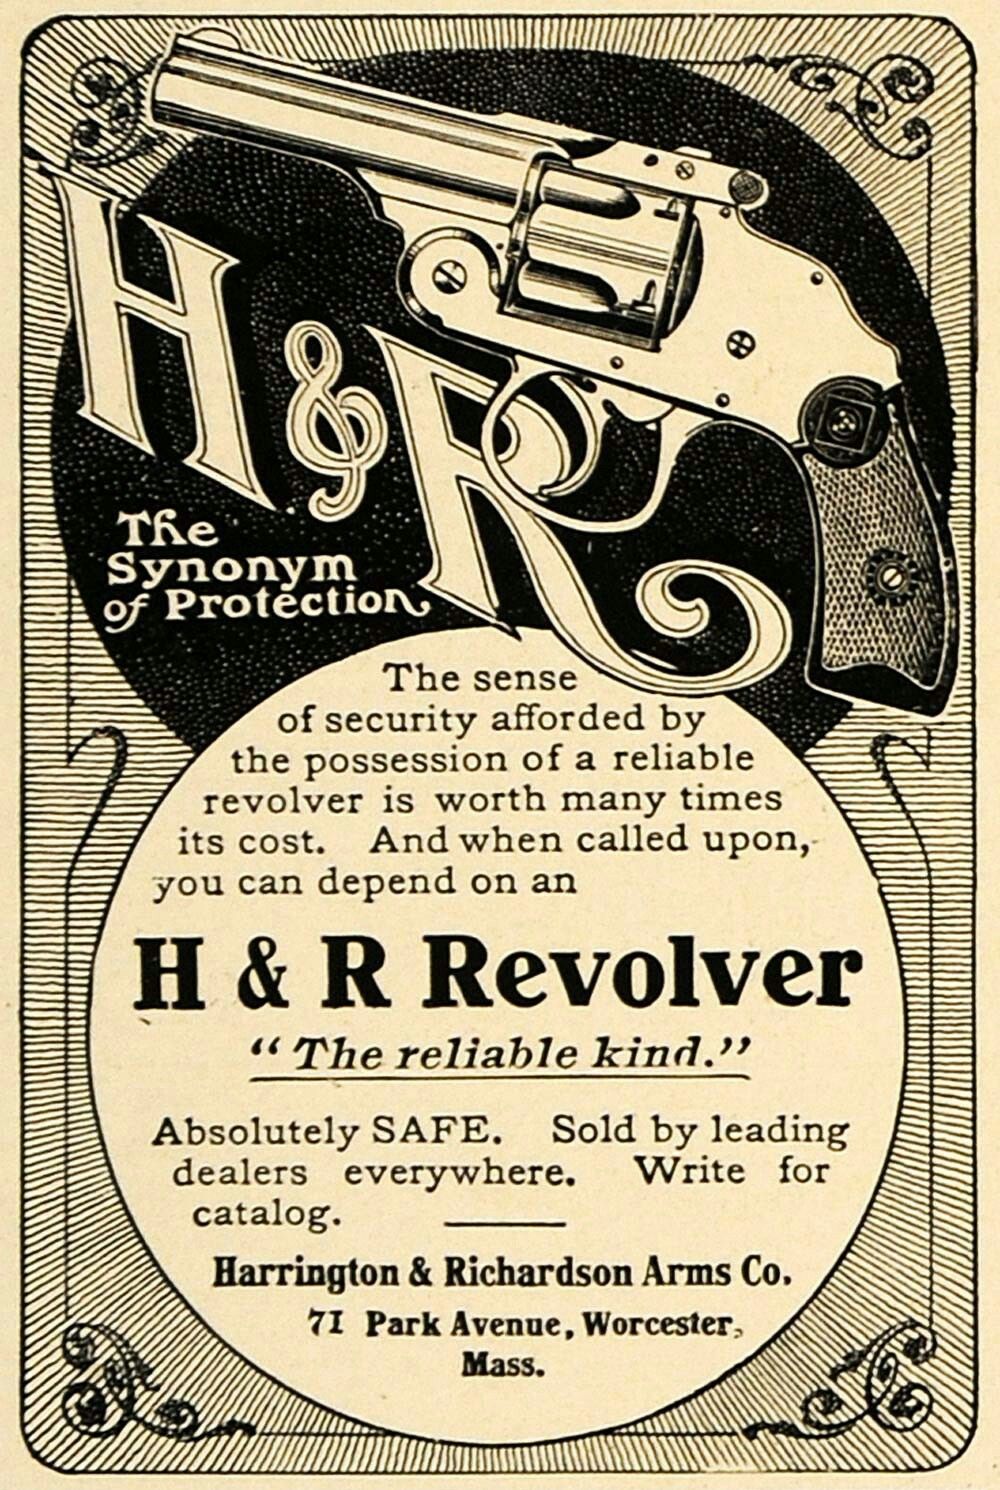 h&r revolver